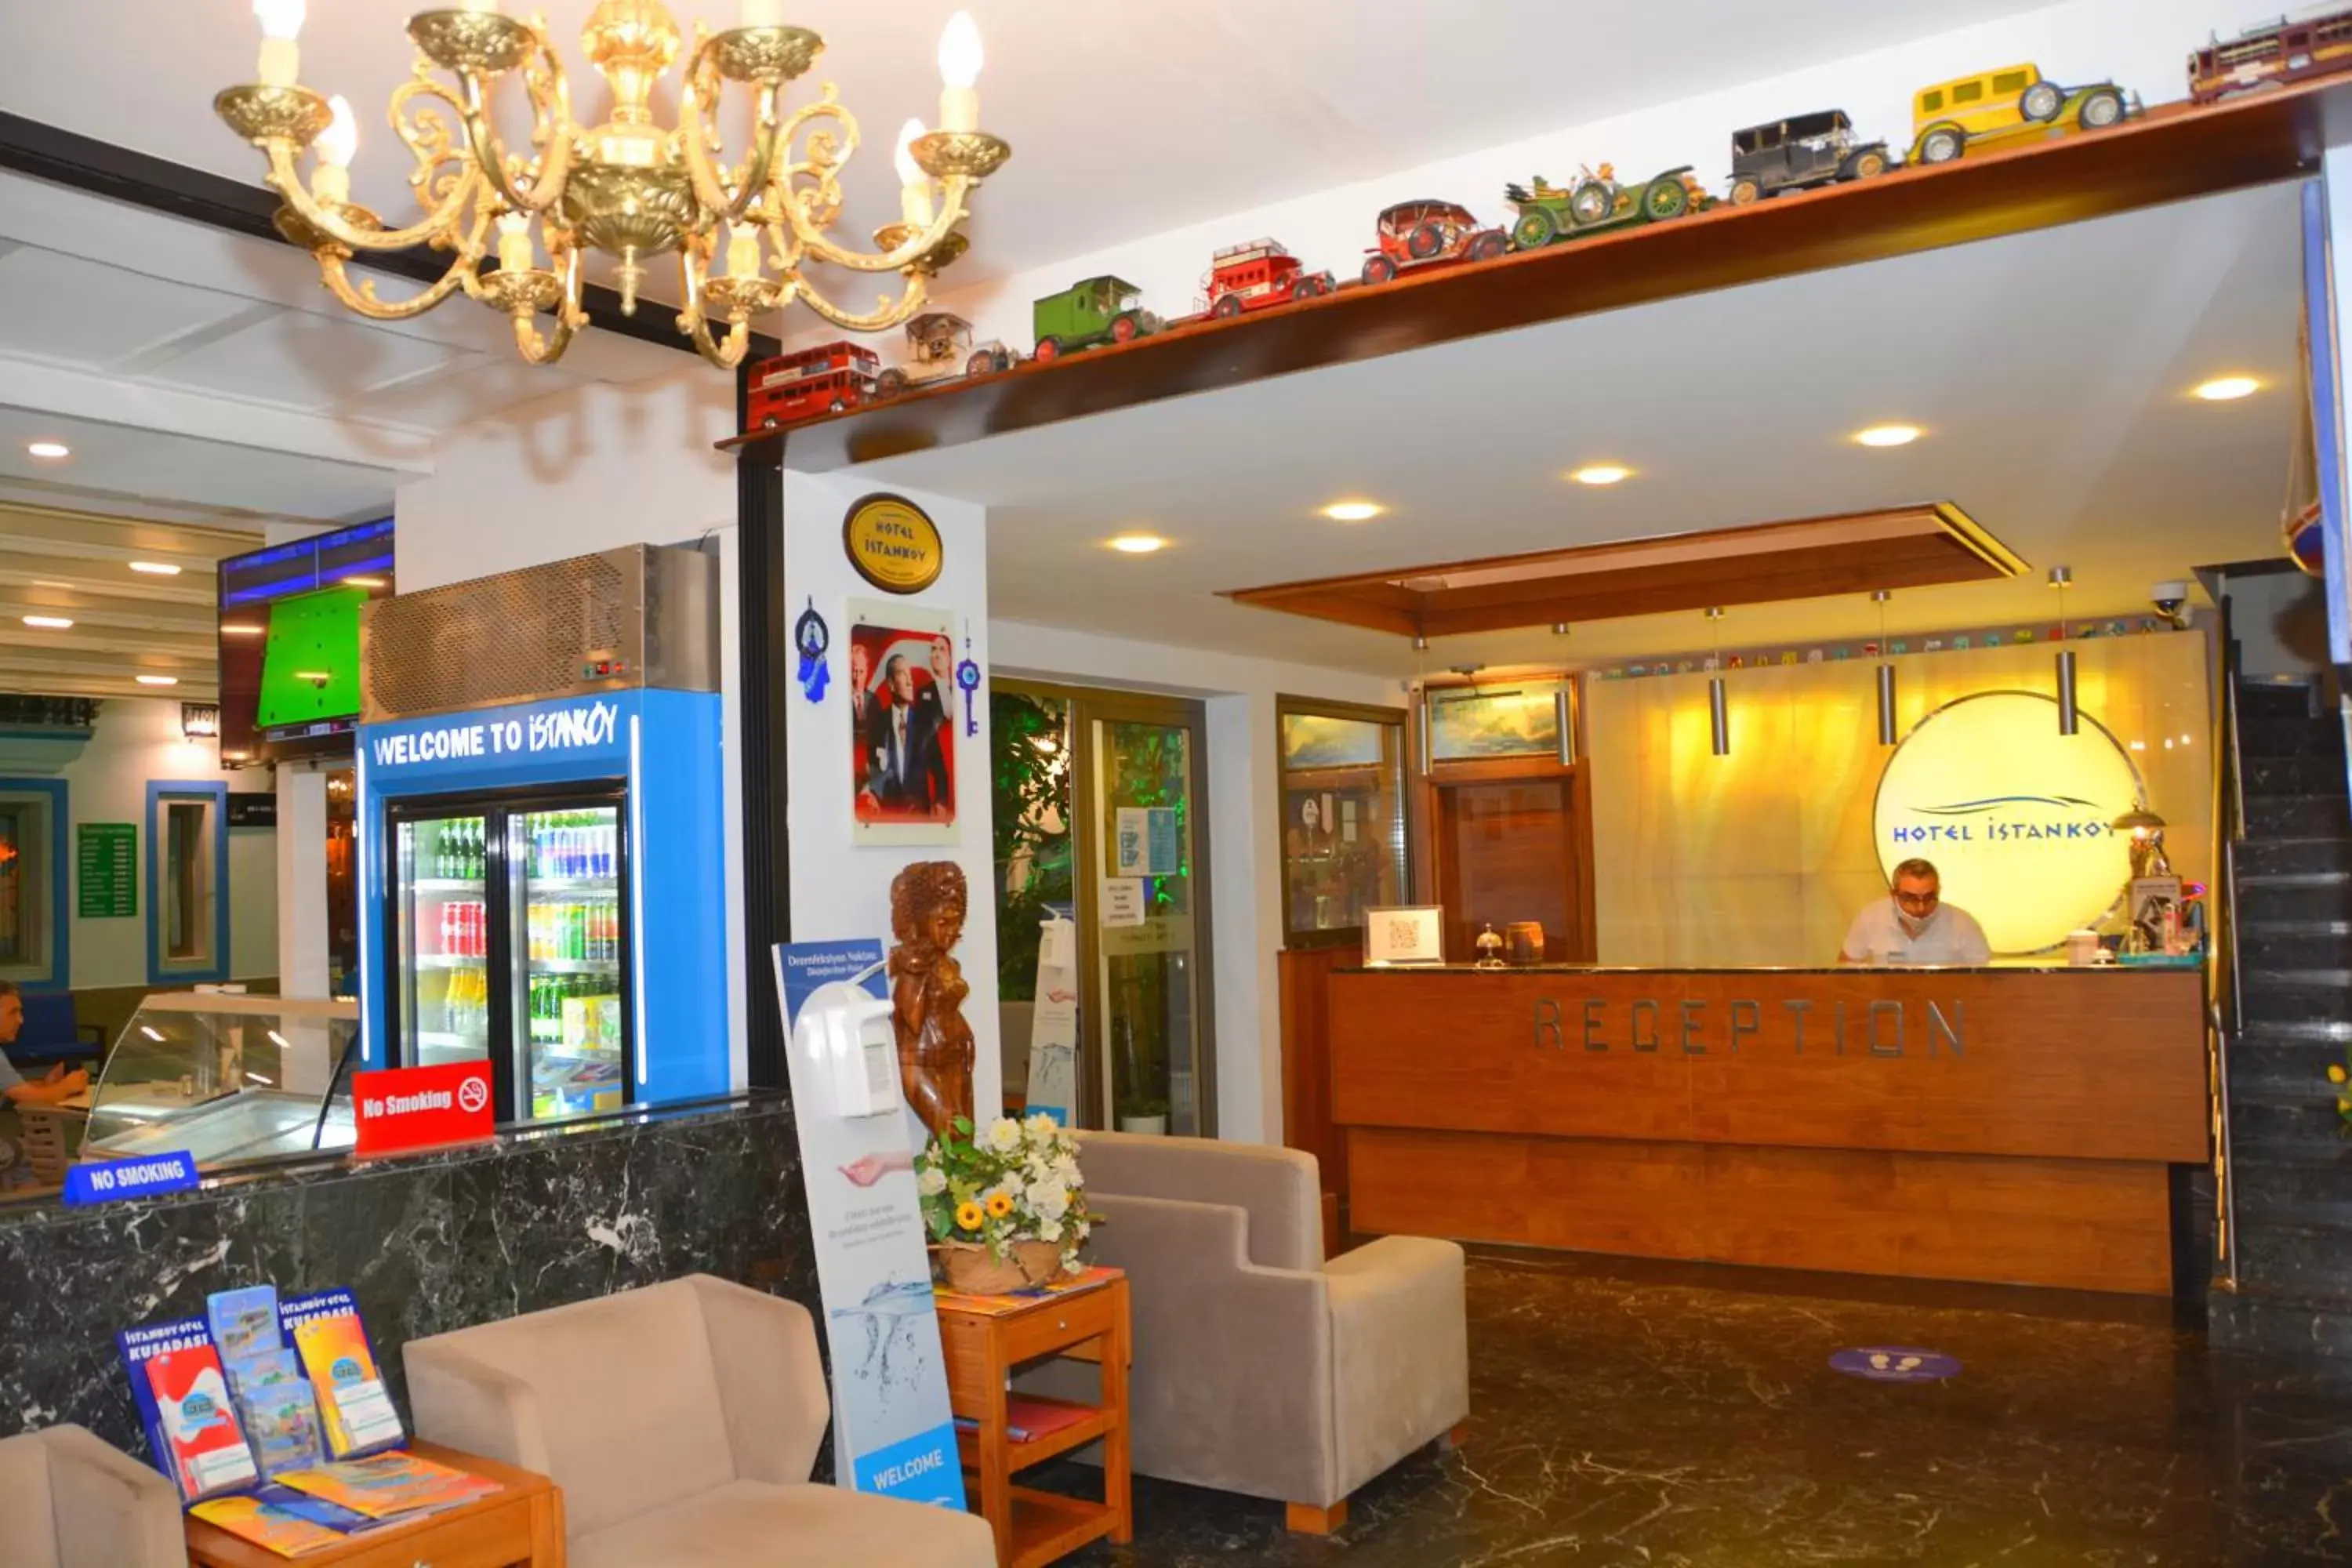 Lobby or reception, Lobby/Reception in Istankoy Hotel